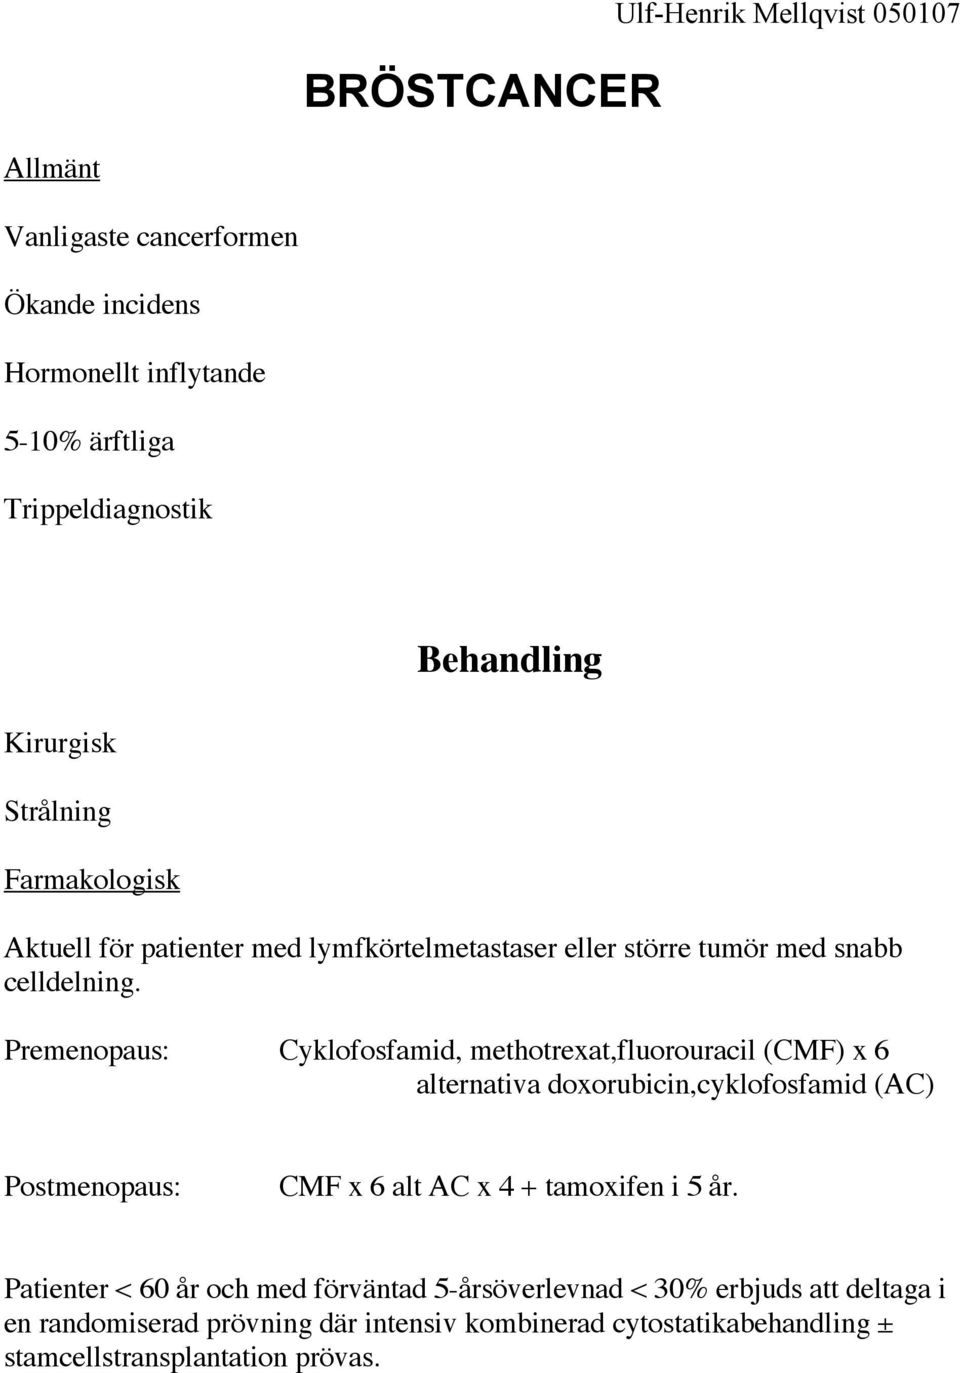 Premenopaus: Cyklofosfamid, methotrexat,fluorouracil (CMF) x 6 alternativa doxorubicin,cyklofosfamid (AC) Postmenopaus: CMF x 6 alt AC x 4 + tamoxifen i 5